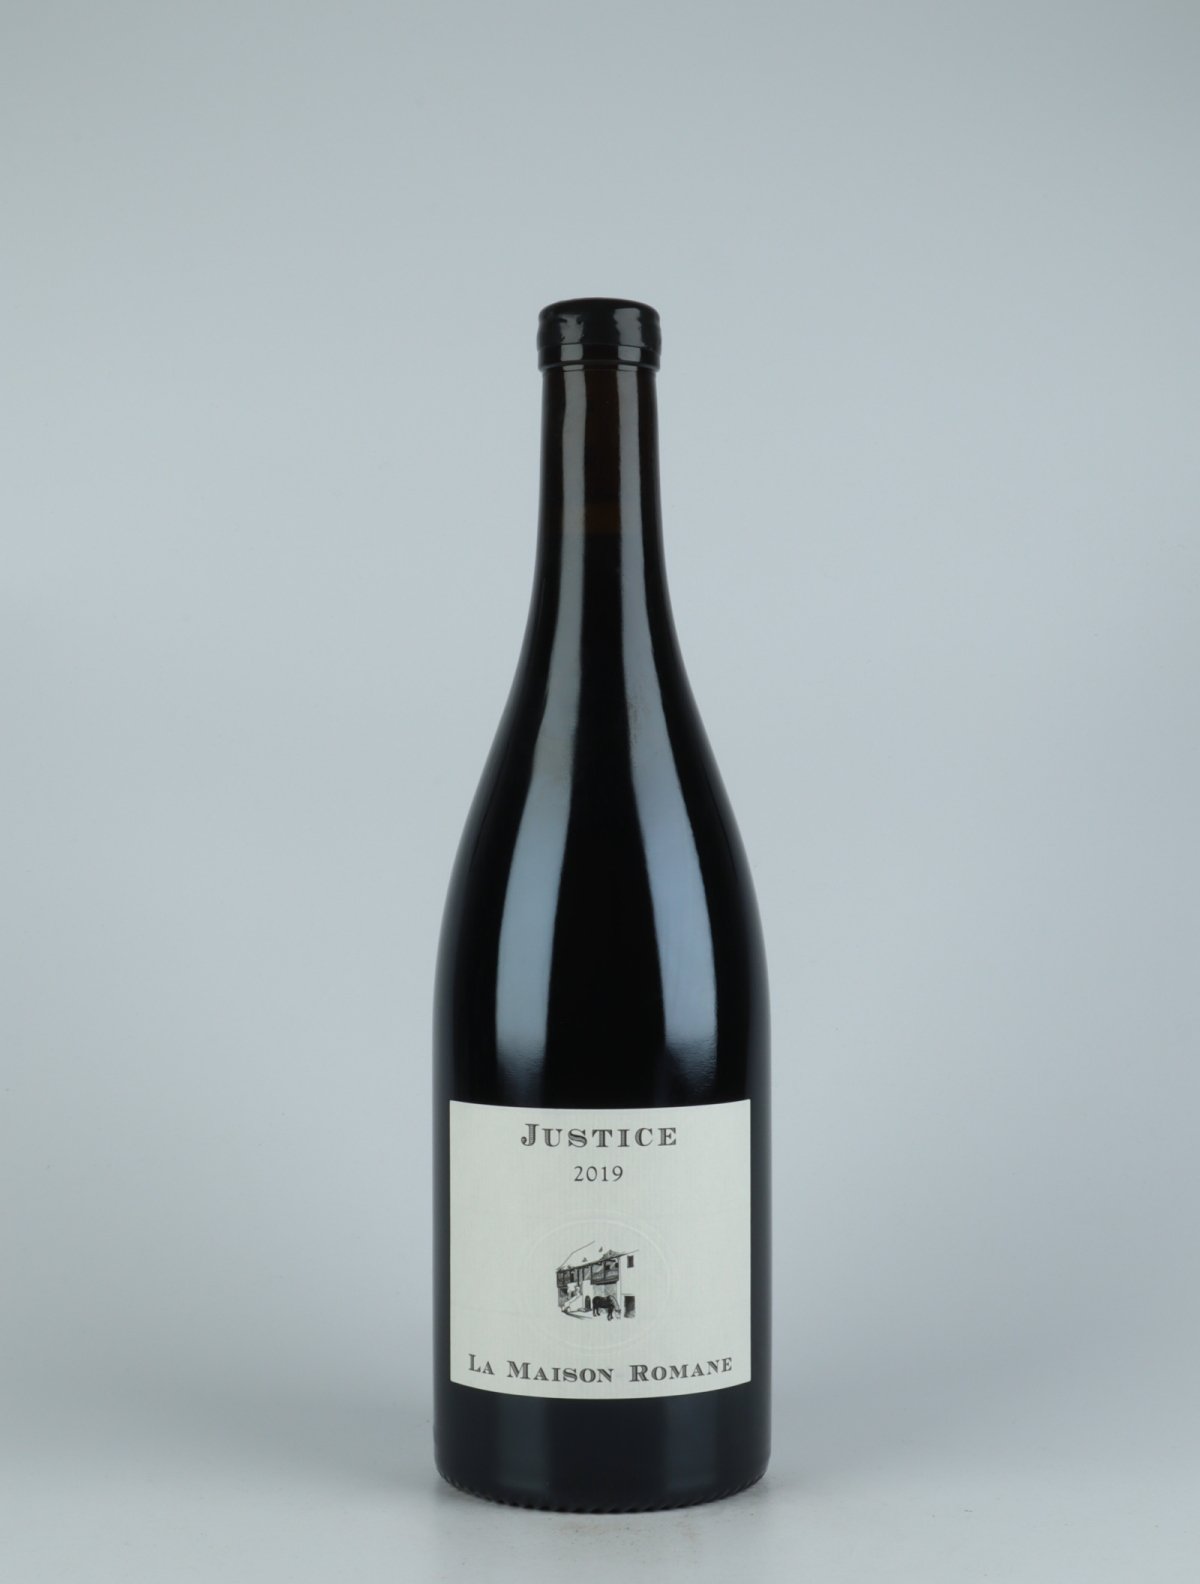 A bottle 2019 Gevrey Chambertin - La Justice Red wine from La Maison Romane, Burgundy in France